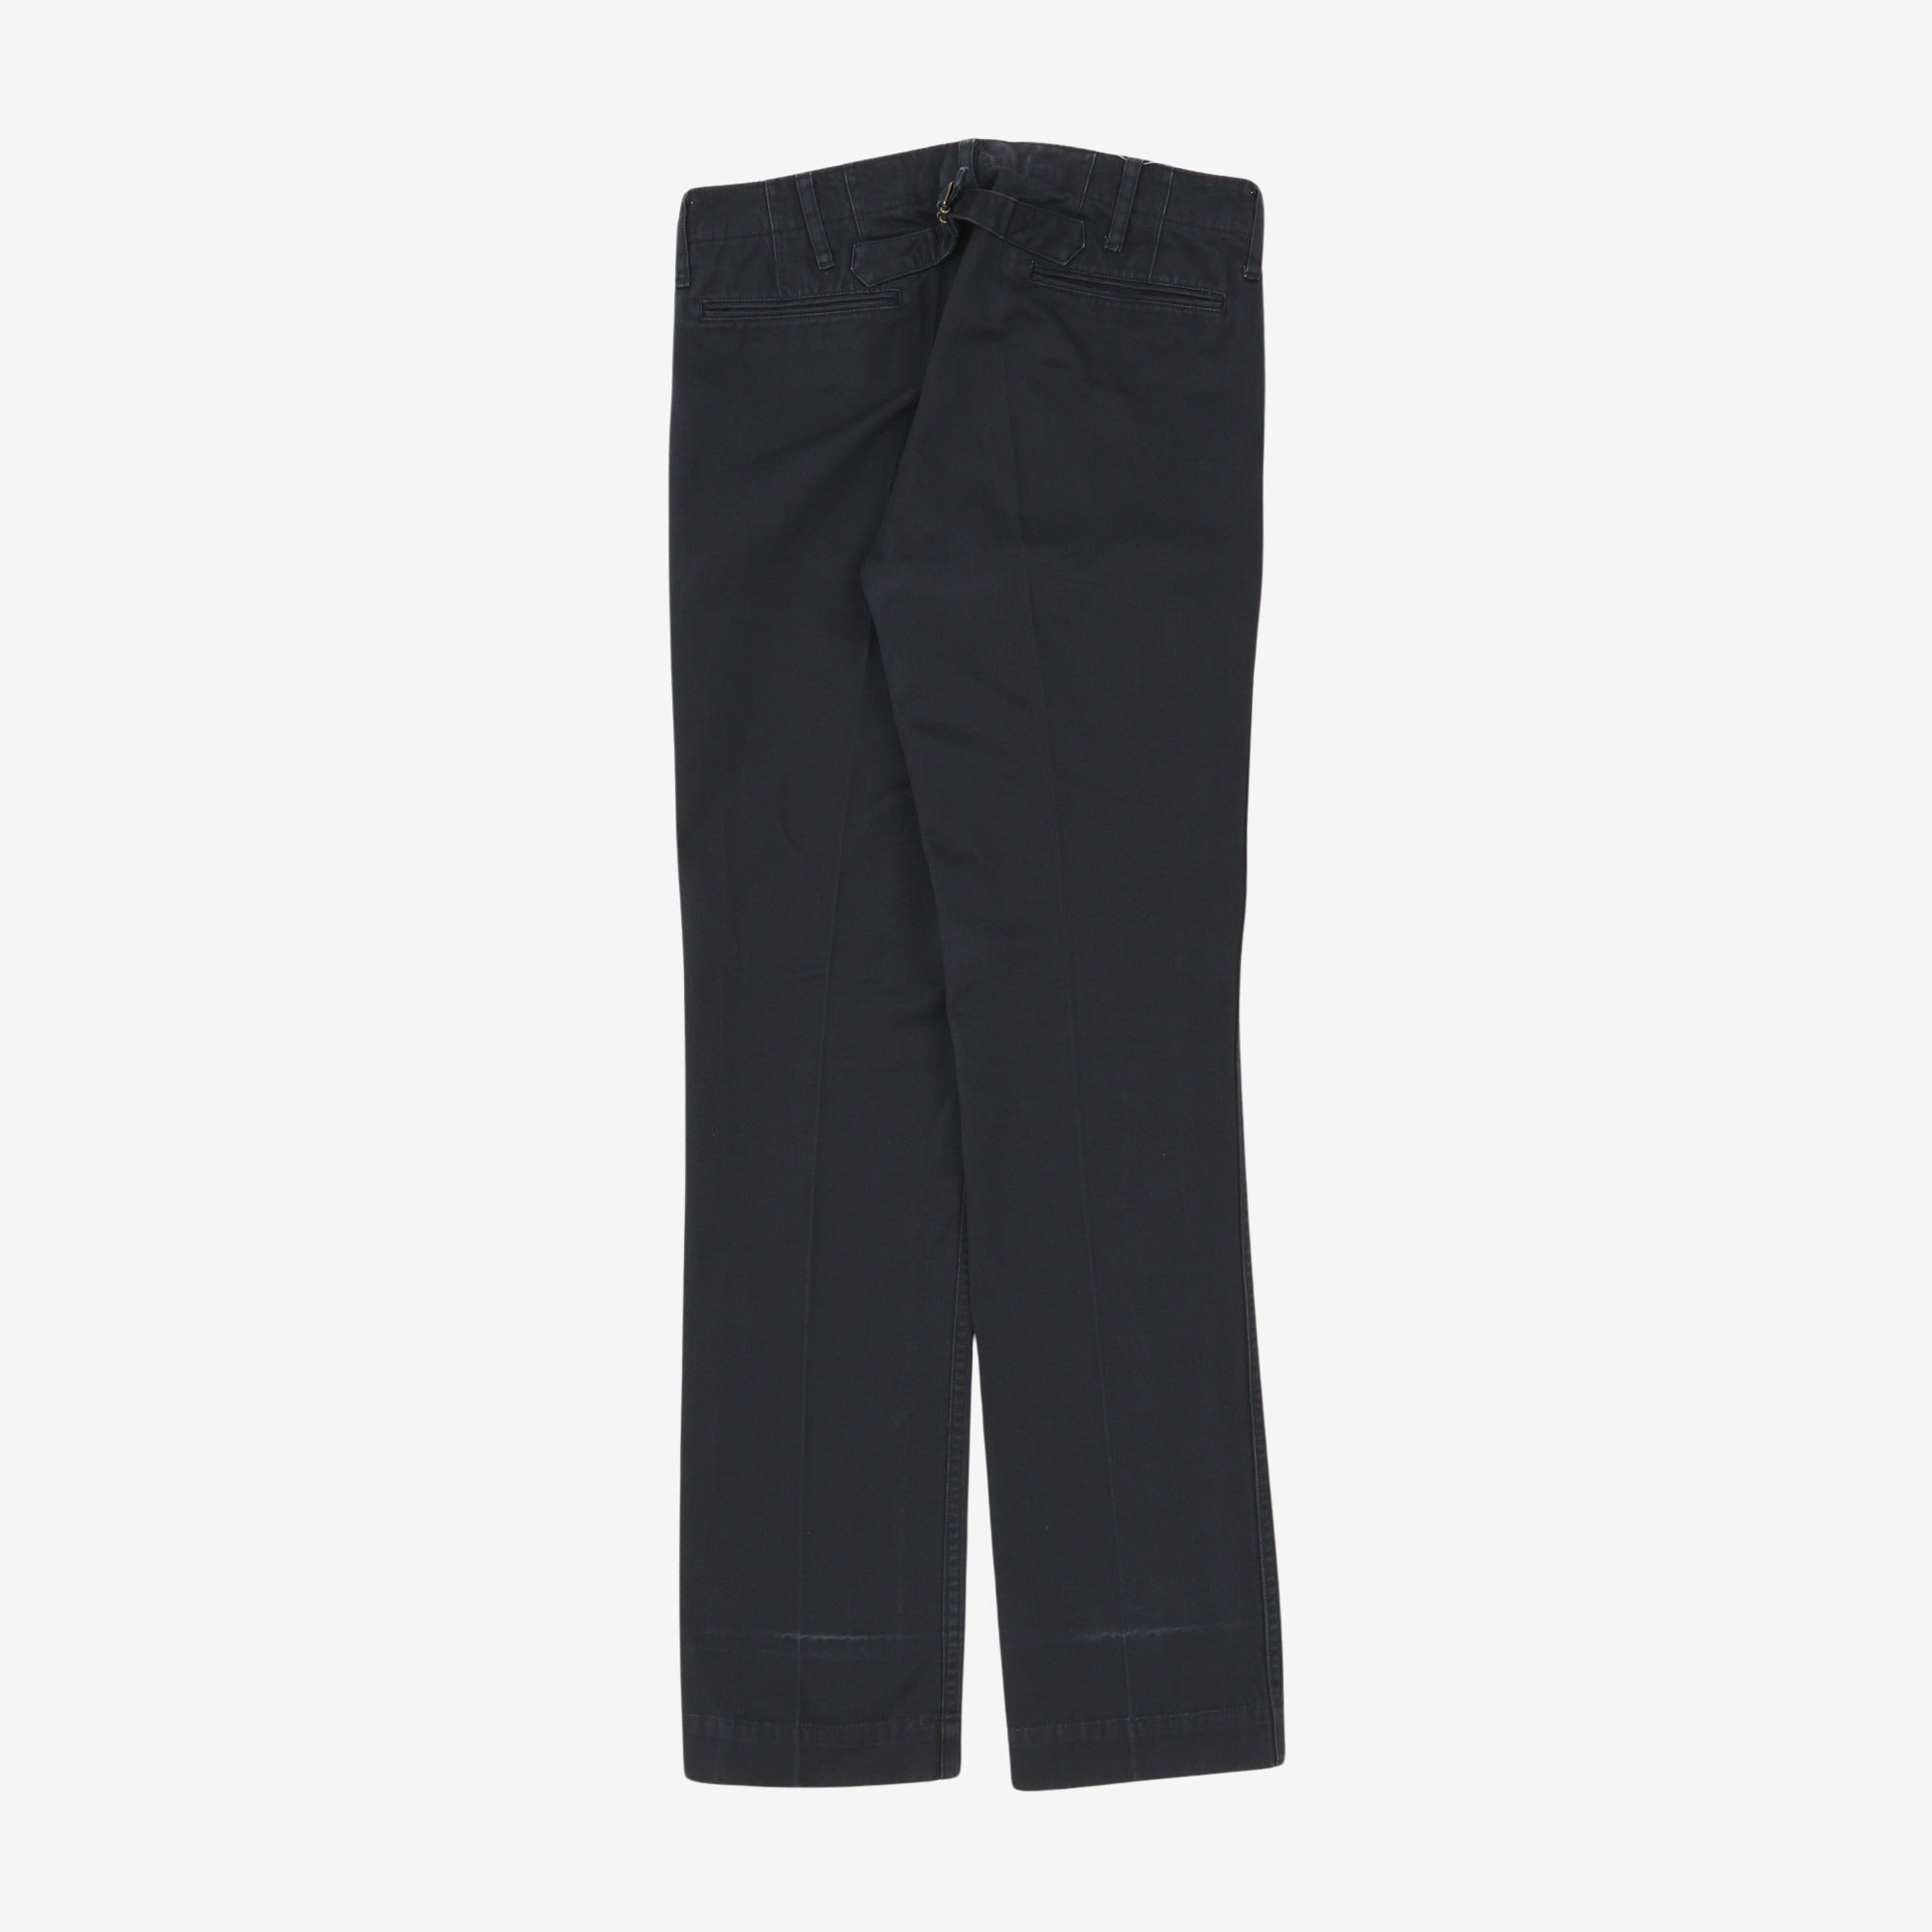 Chino Trousers (31W x 30.5L)